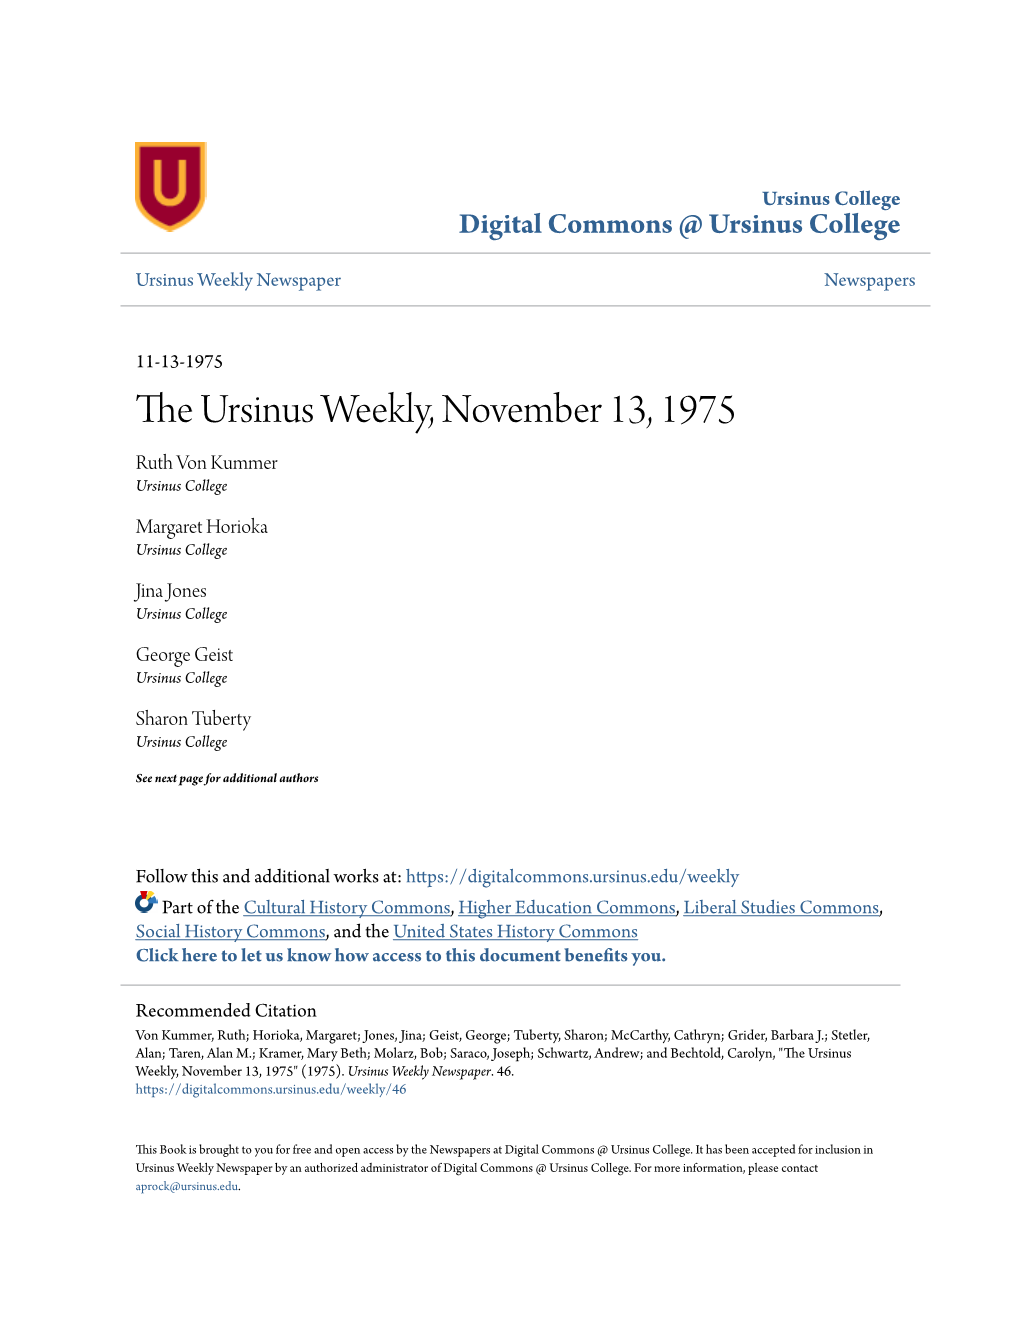 The Ursinus Weekly, November 13, 1975